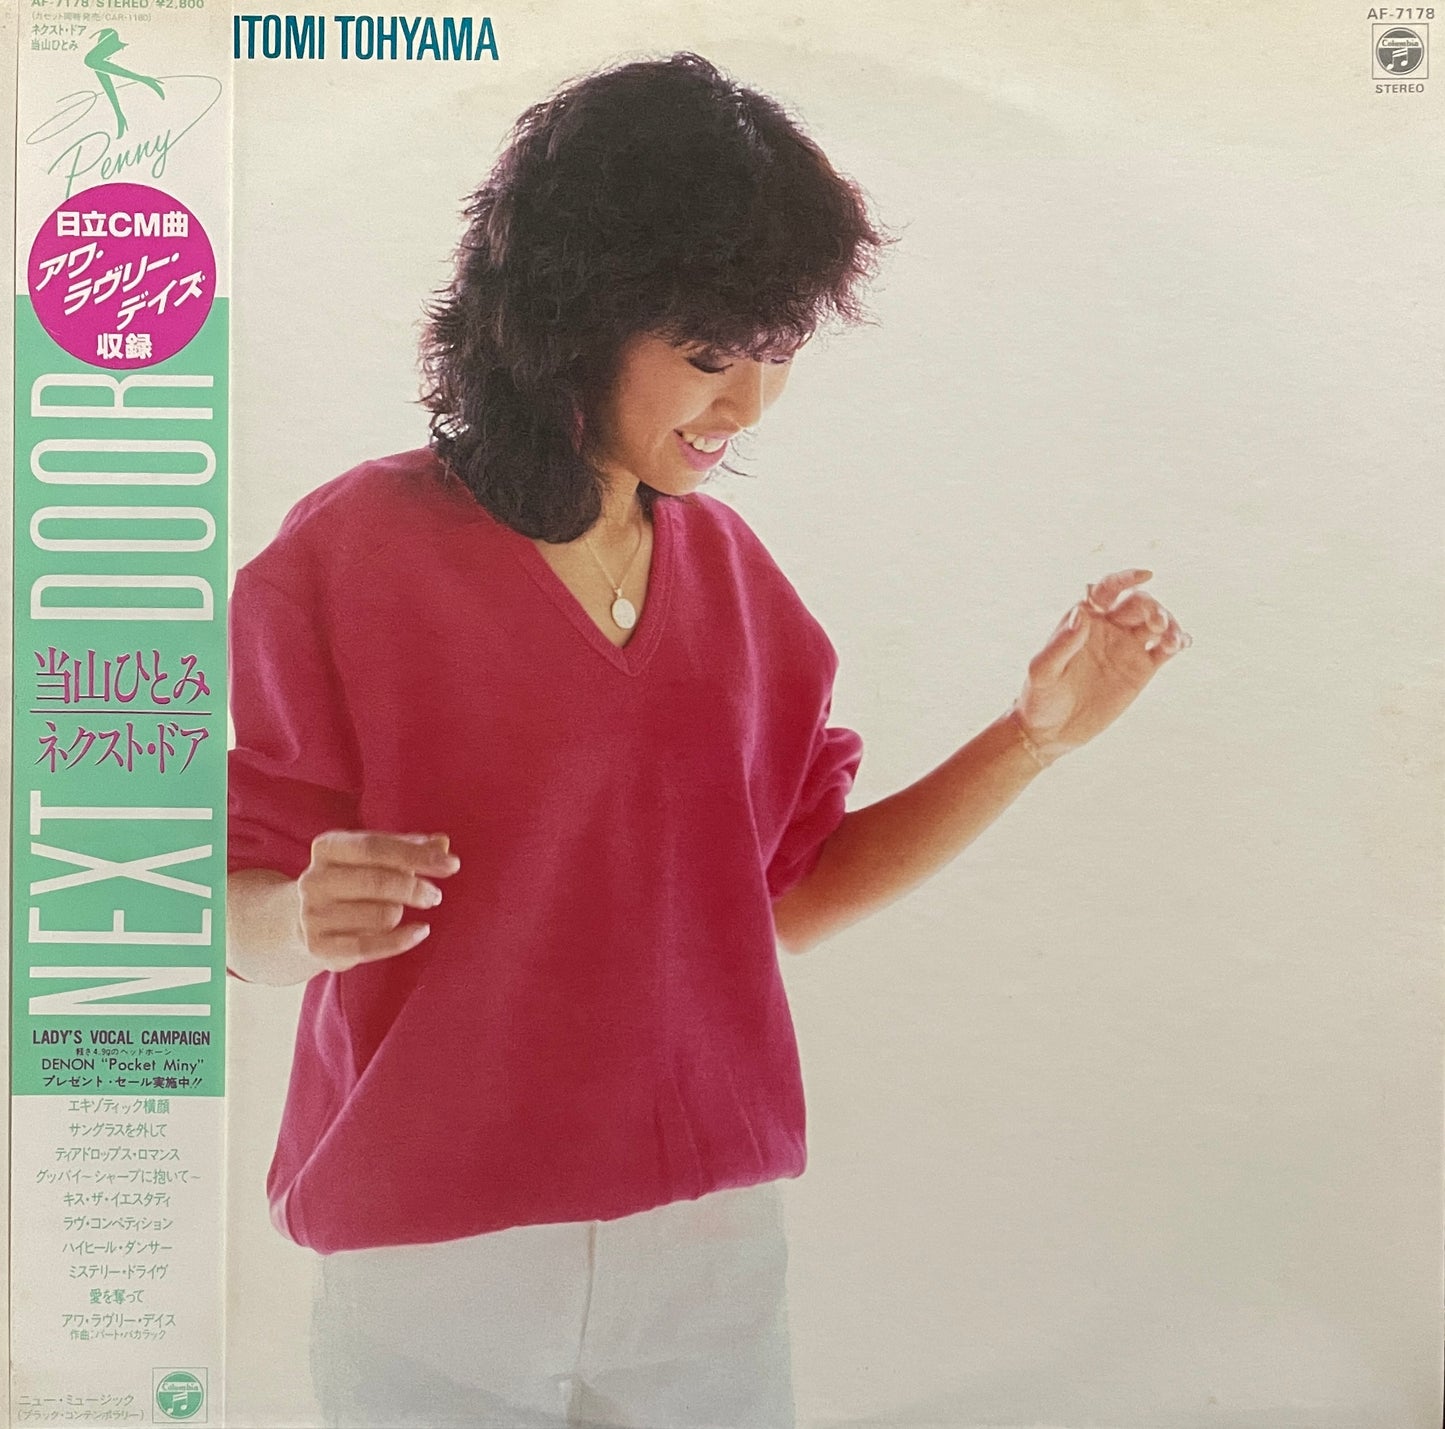 Hitomi Tohyama "Next Door" (1983)